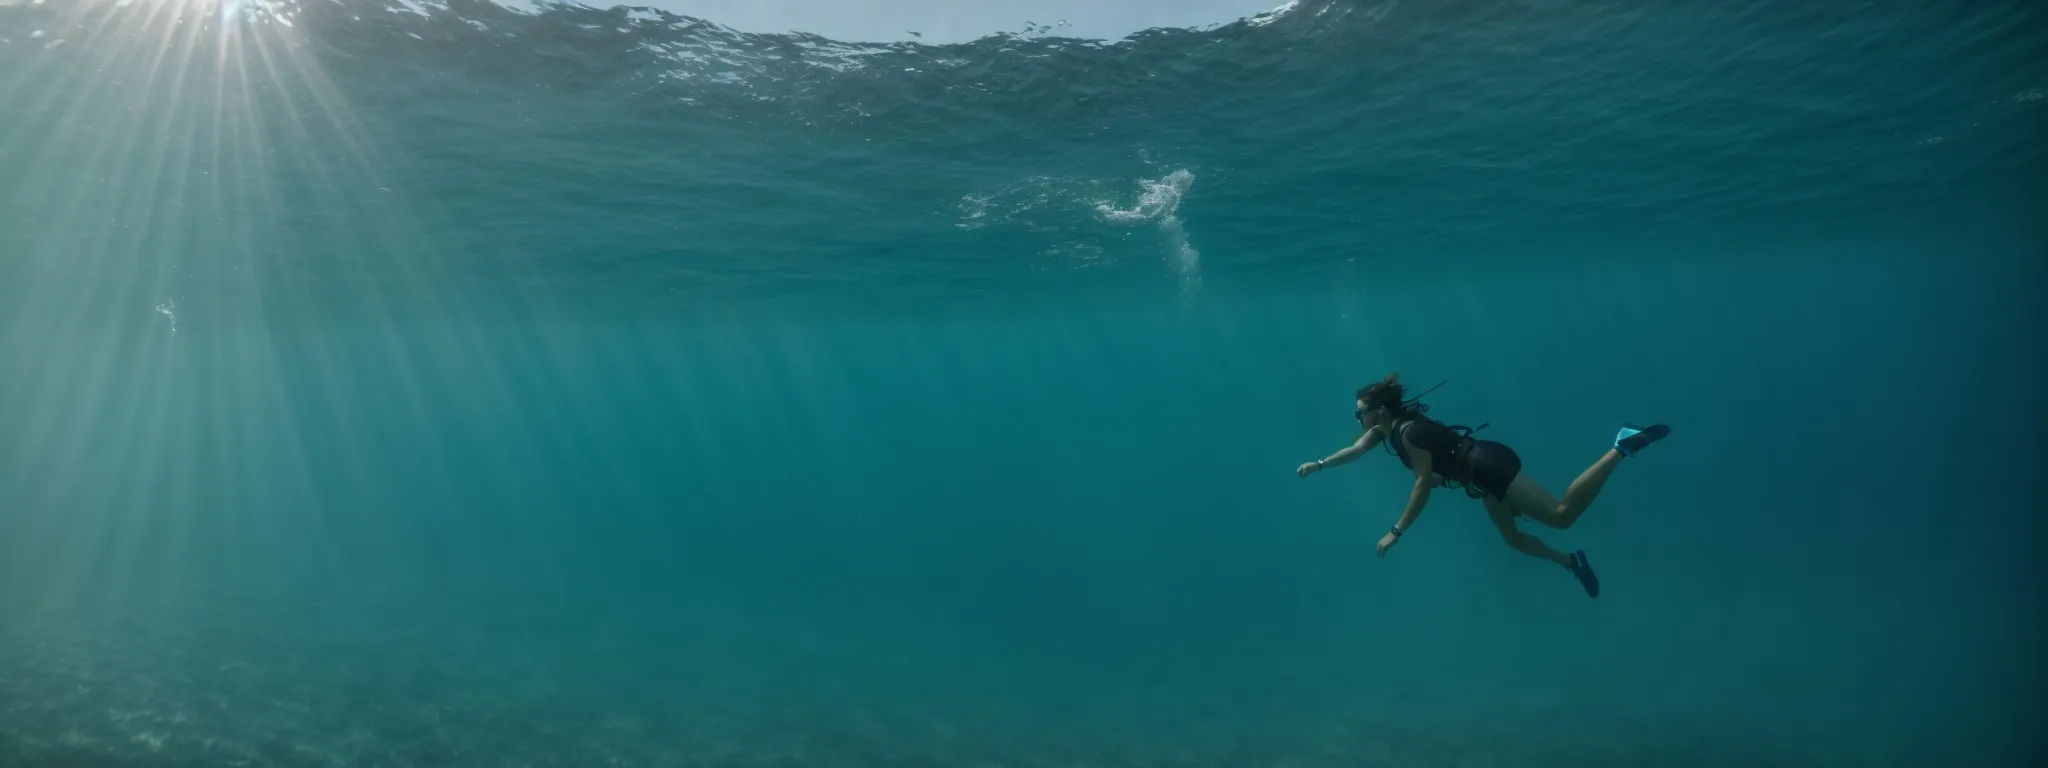 a person diving into a calm ocean, symbolizing the exploration of keyword metrics.